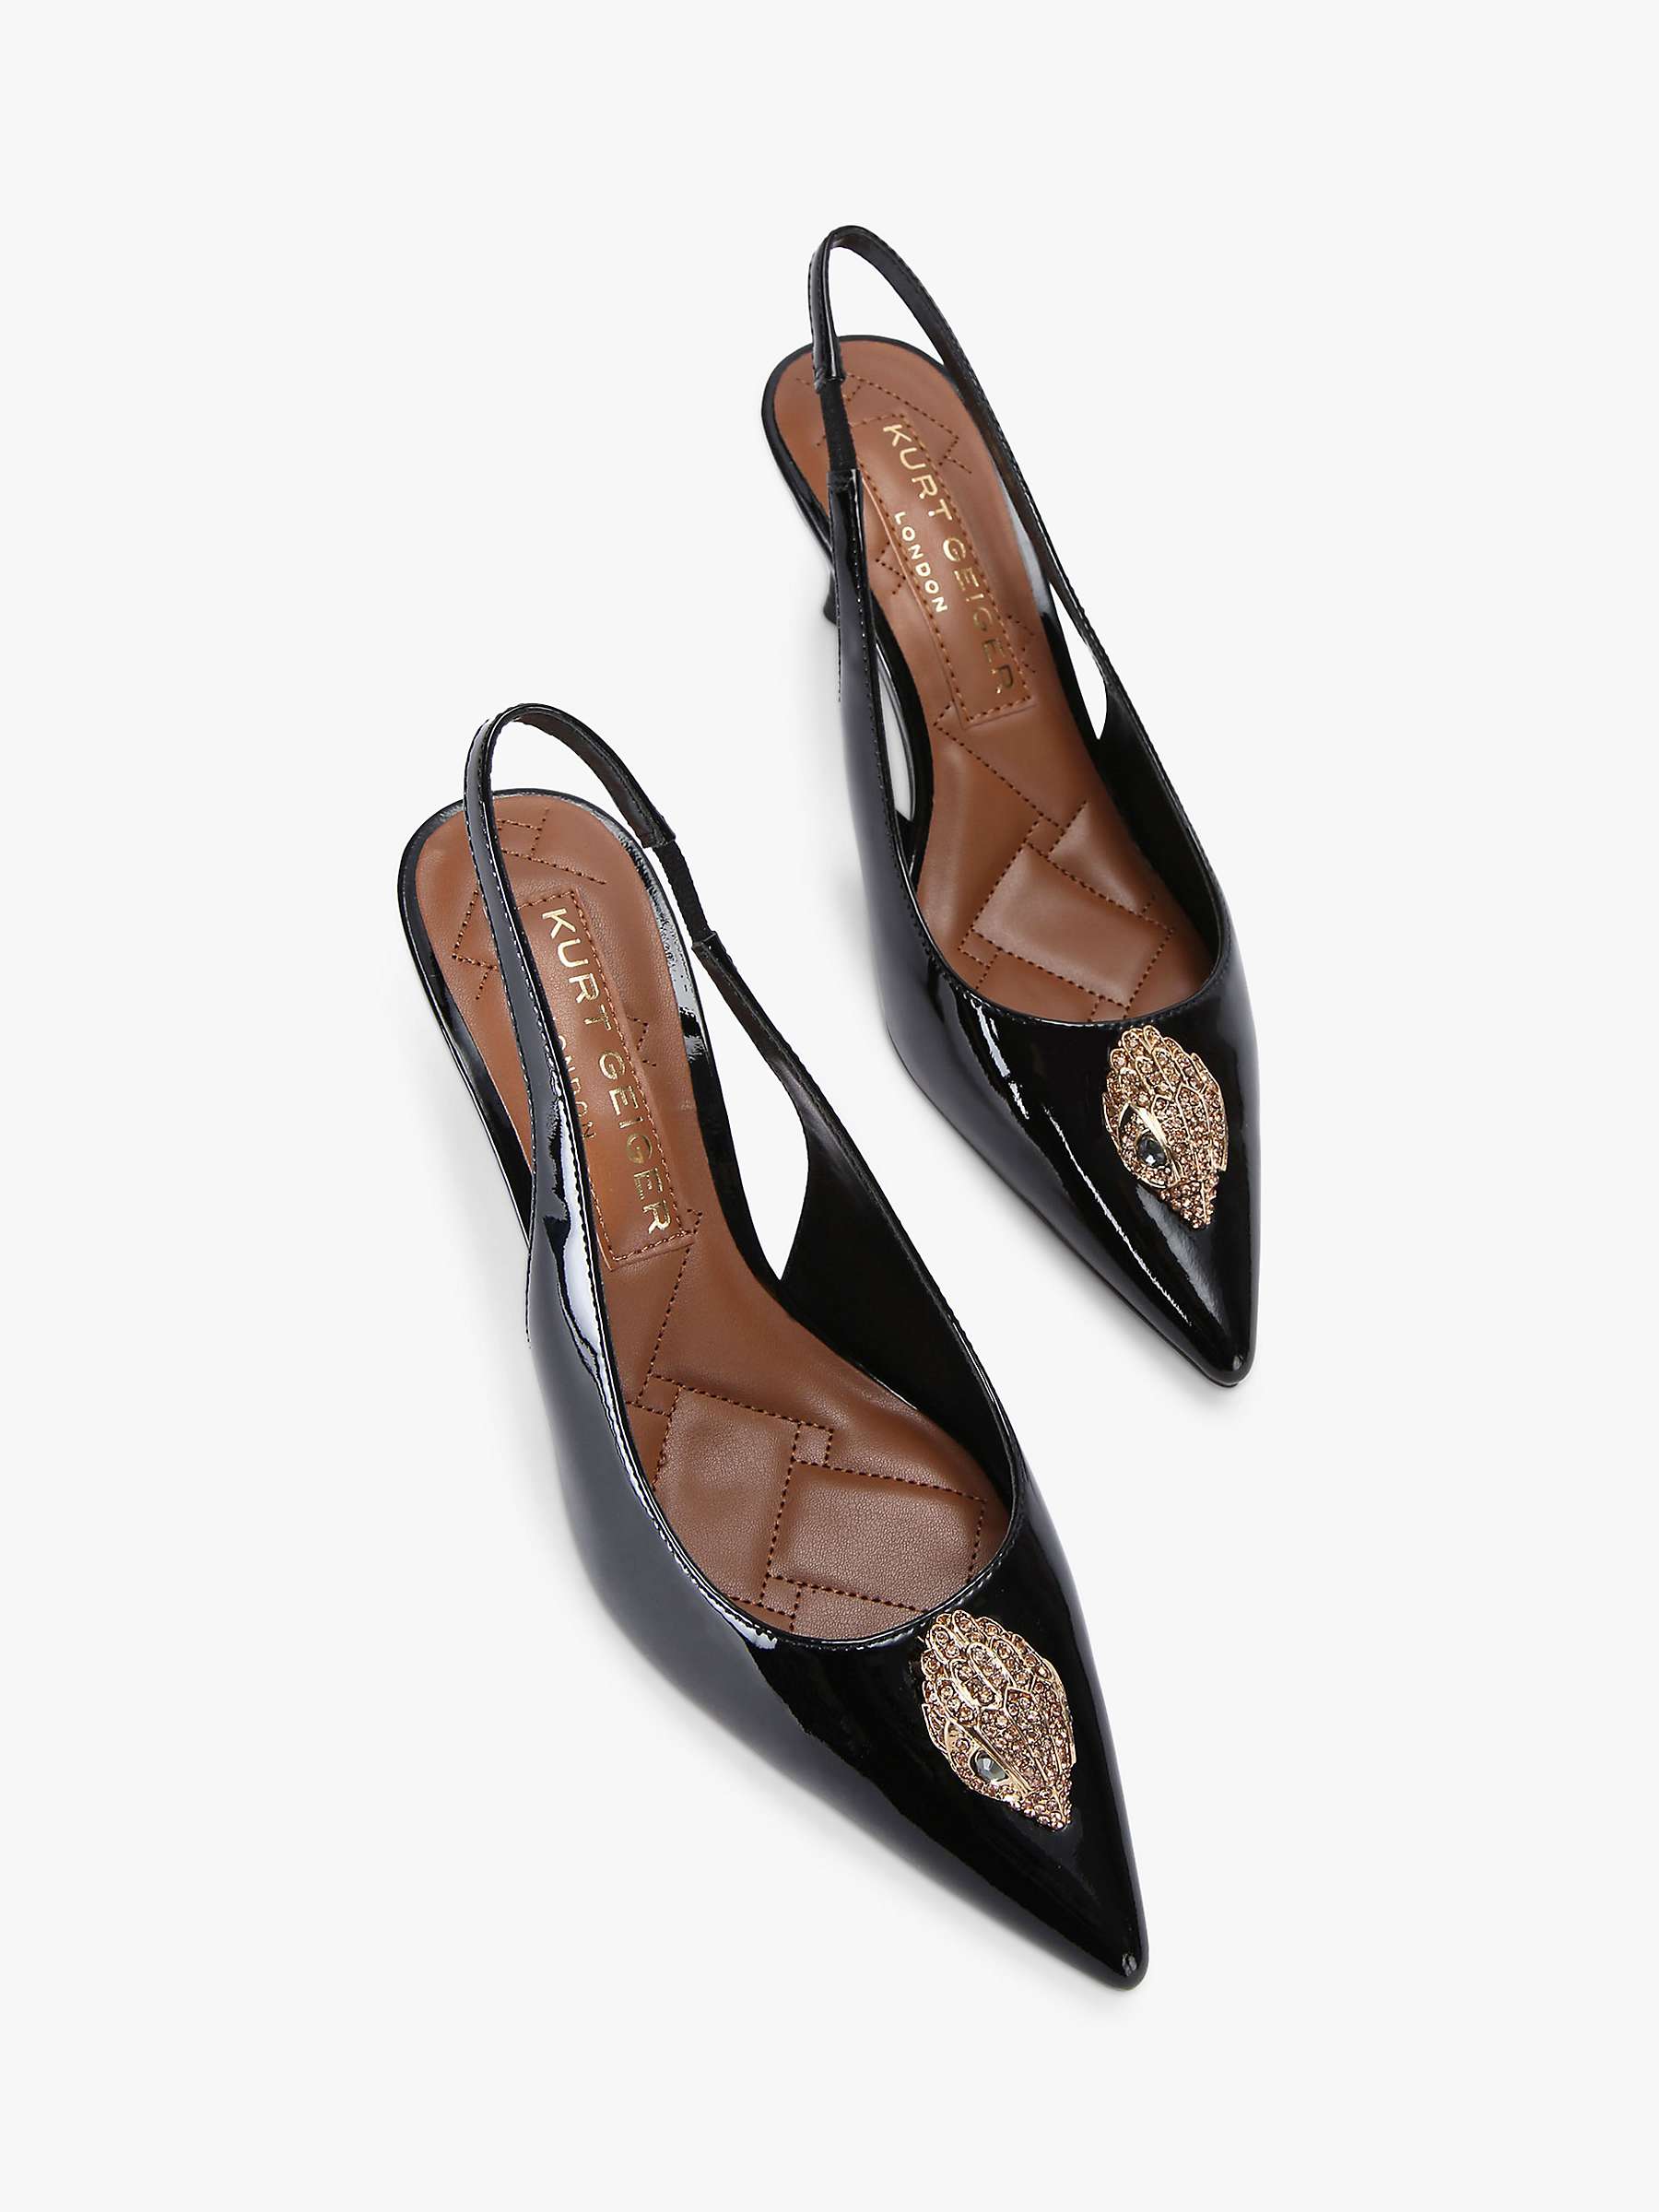 Buy Kurt Geiger London Belgravia Patent Slingback Court Shoes, Black Online at johnlewis.com